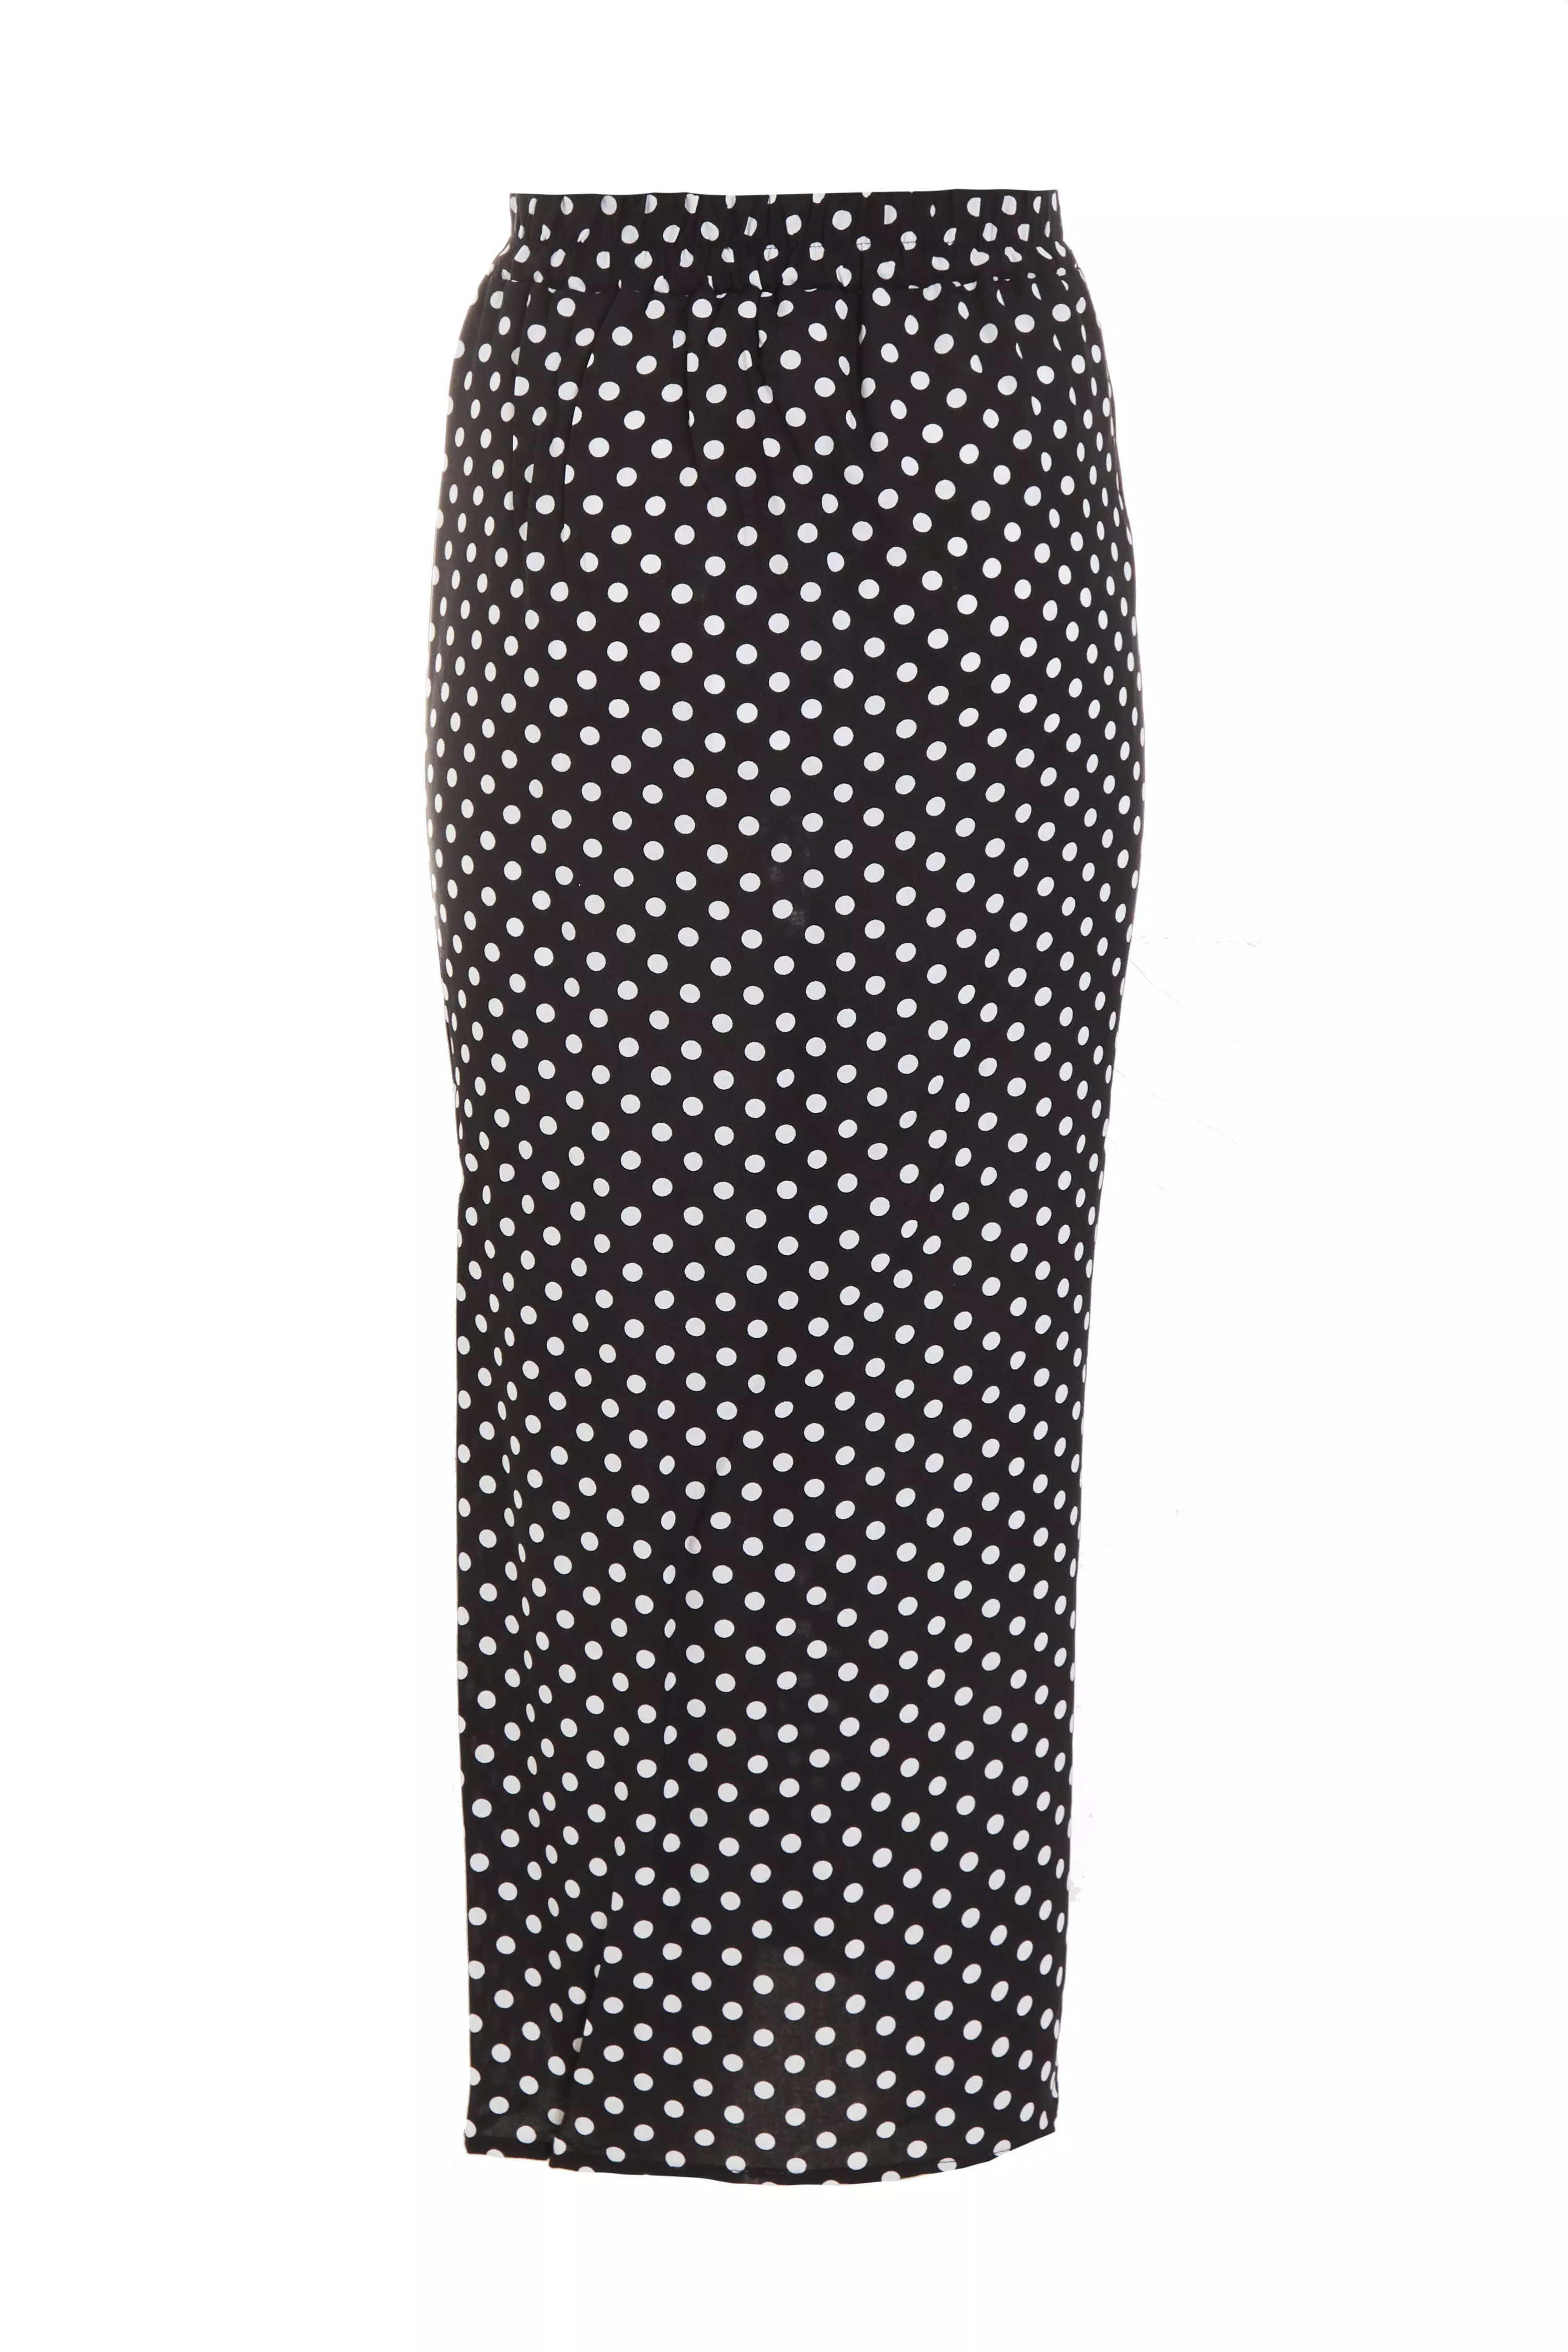 Black Polka Dot Ruched Midi Skirt - QUIZ Clothing